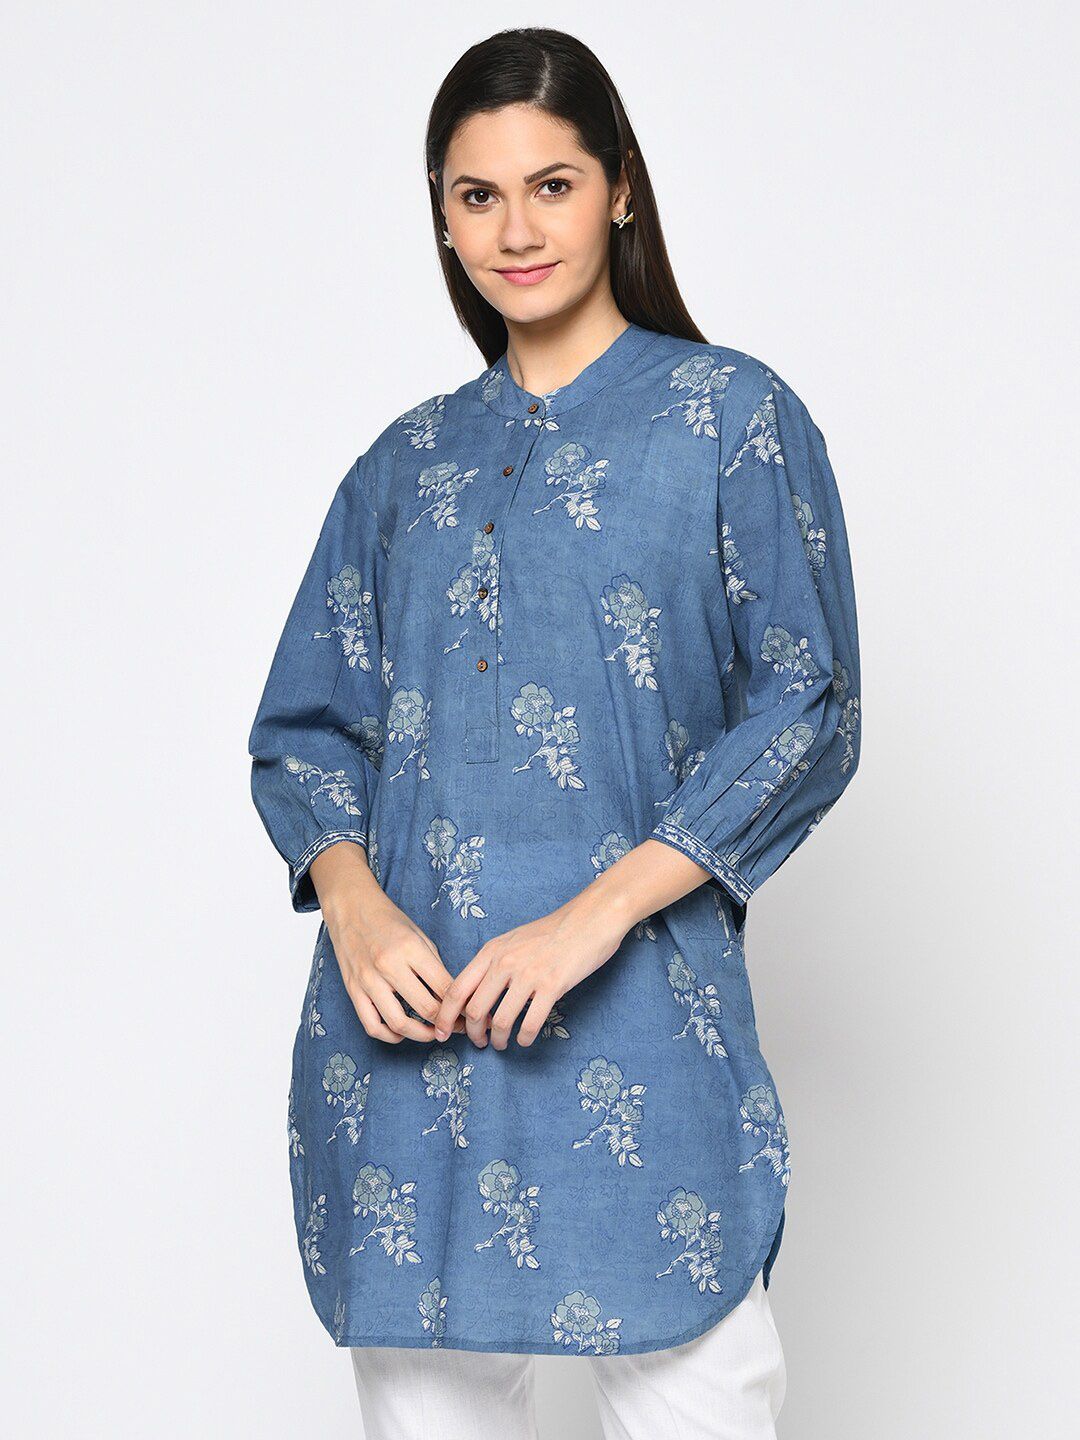 Fabindia Blue & White Mandarin Collar Printed Tunic Price in India